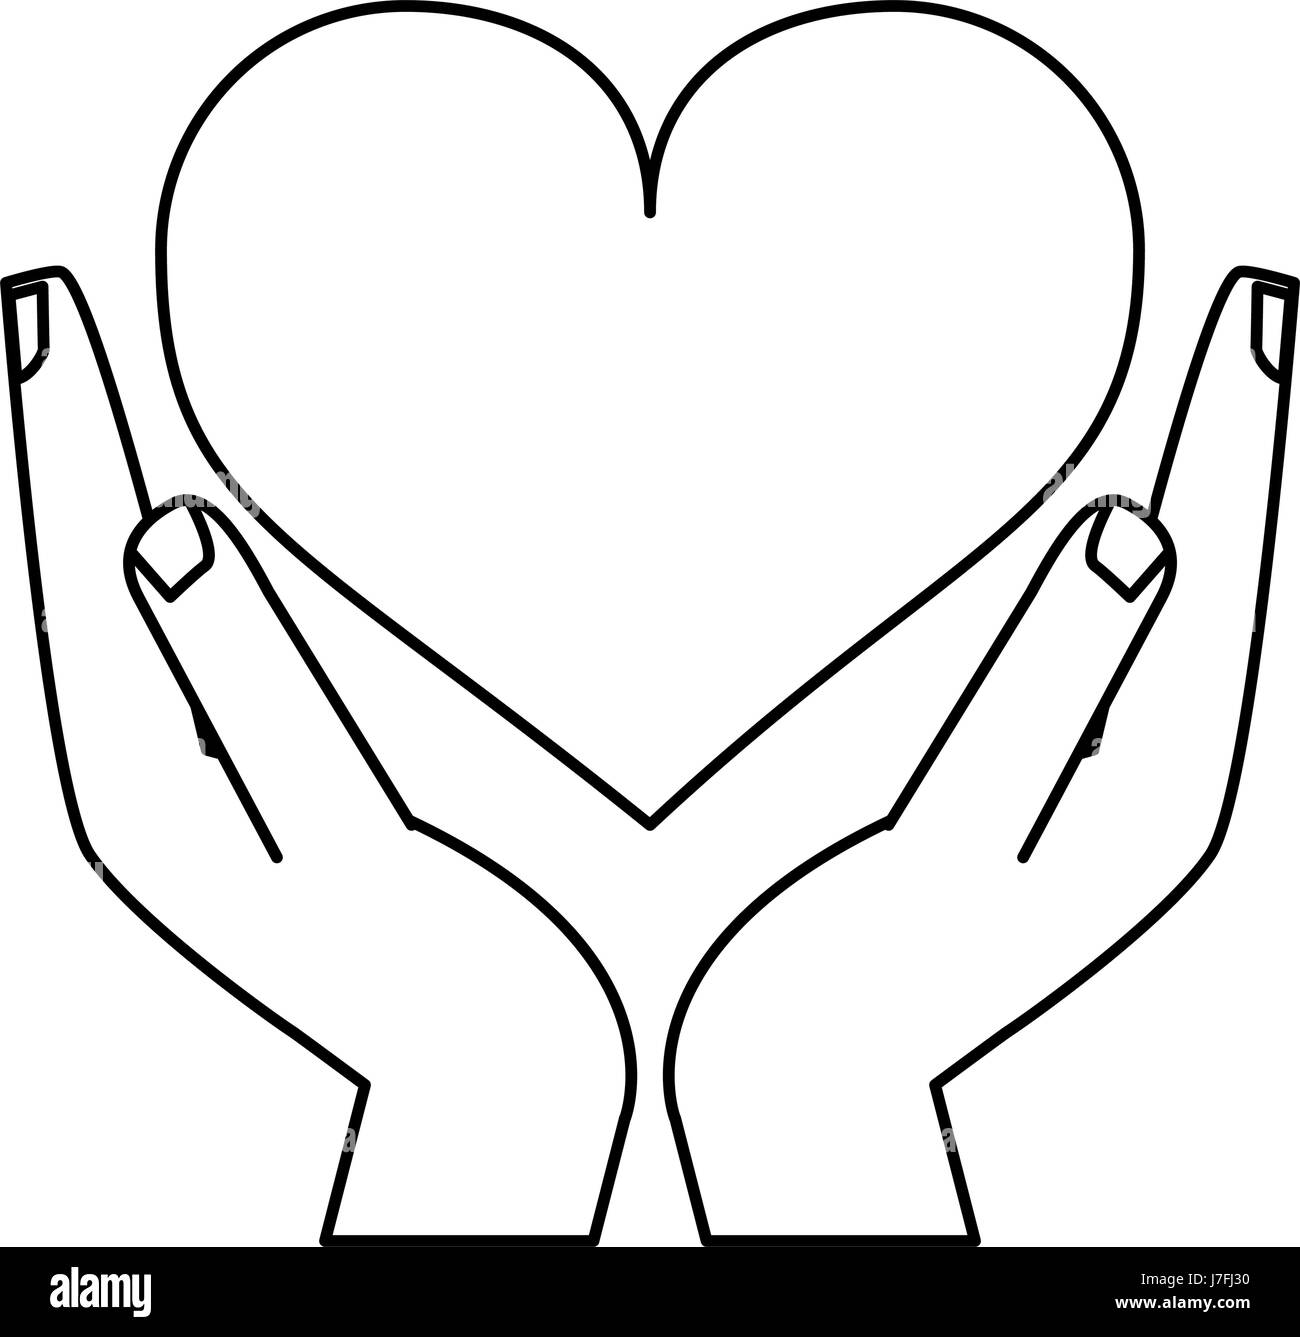 Hand Mit Herz Cartoon Symbolbild Stock Vektorgrafik Alamy